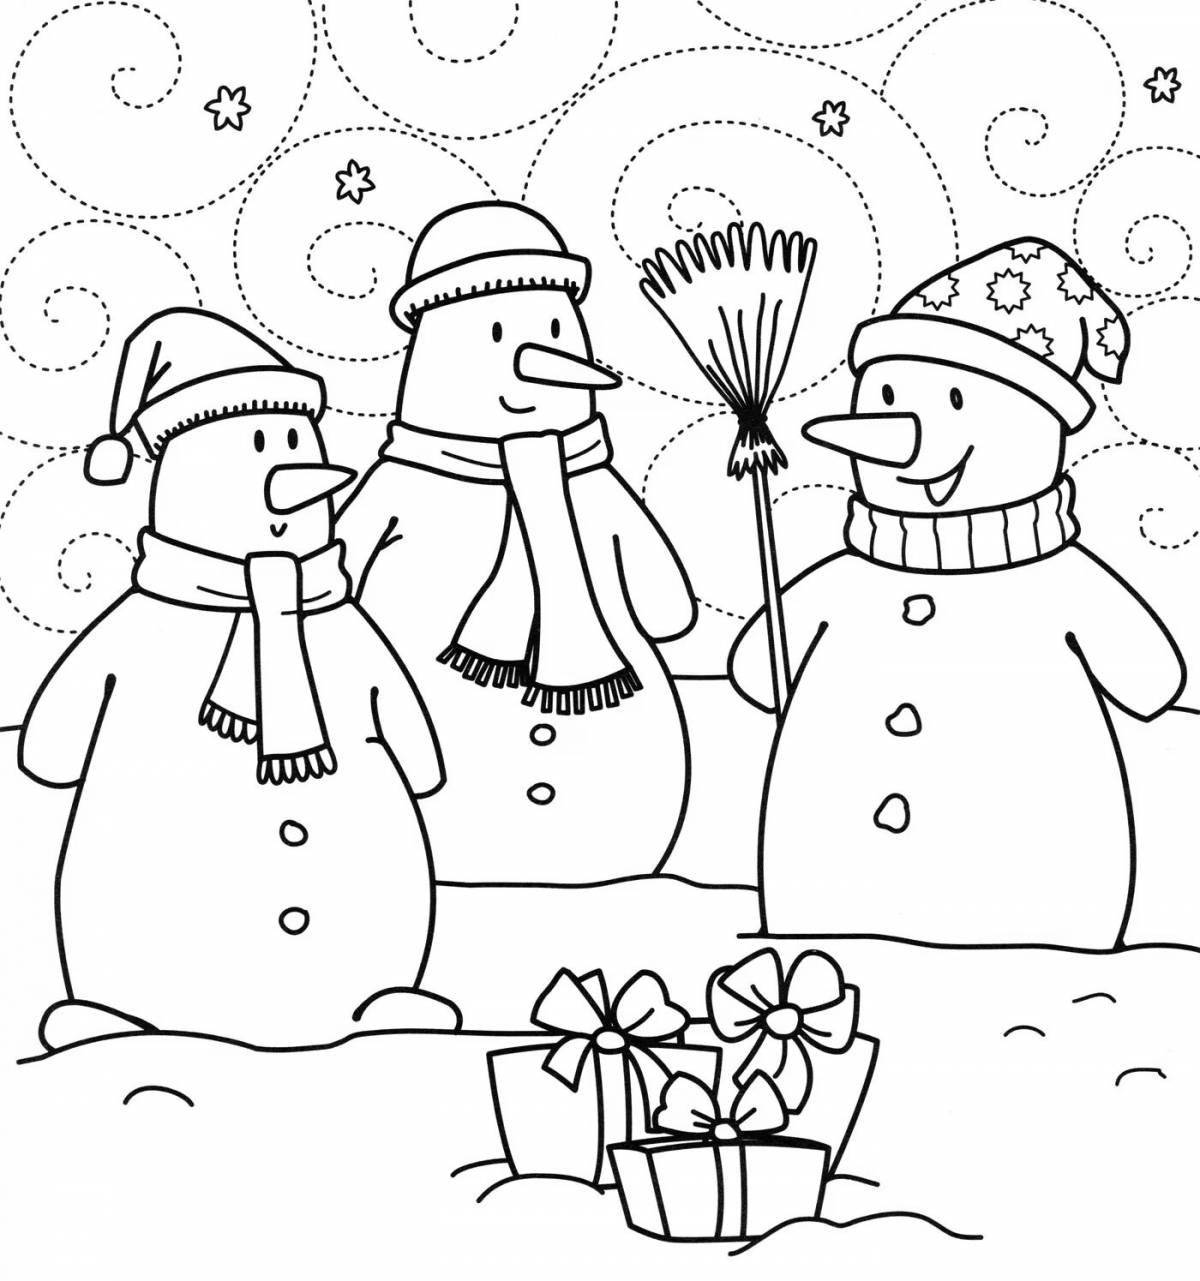 Fun family coloring of snowmen